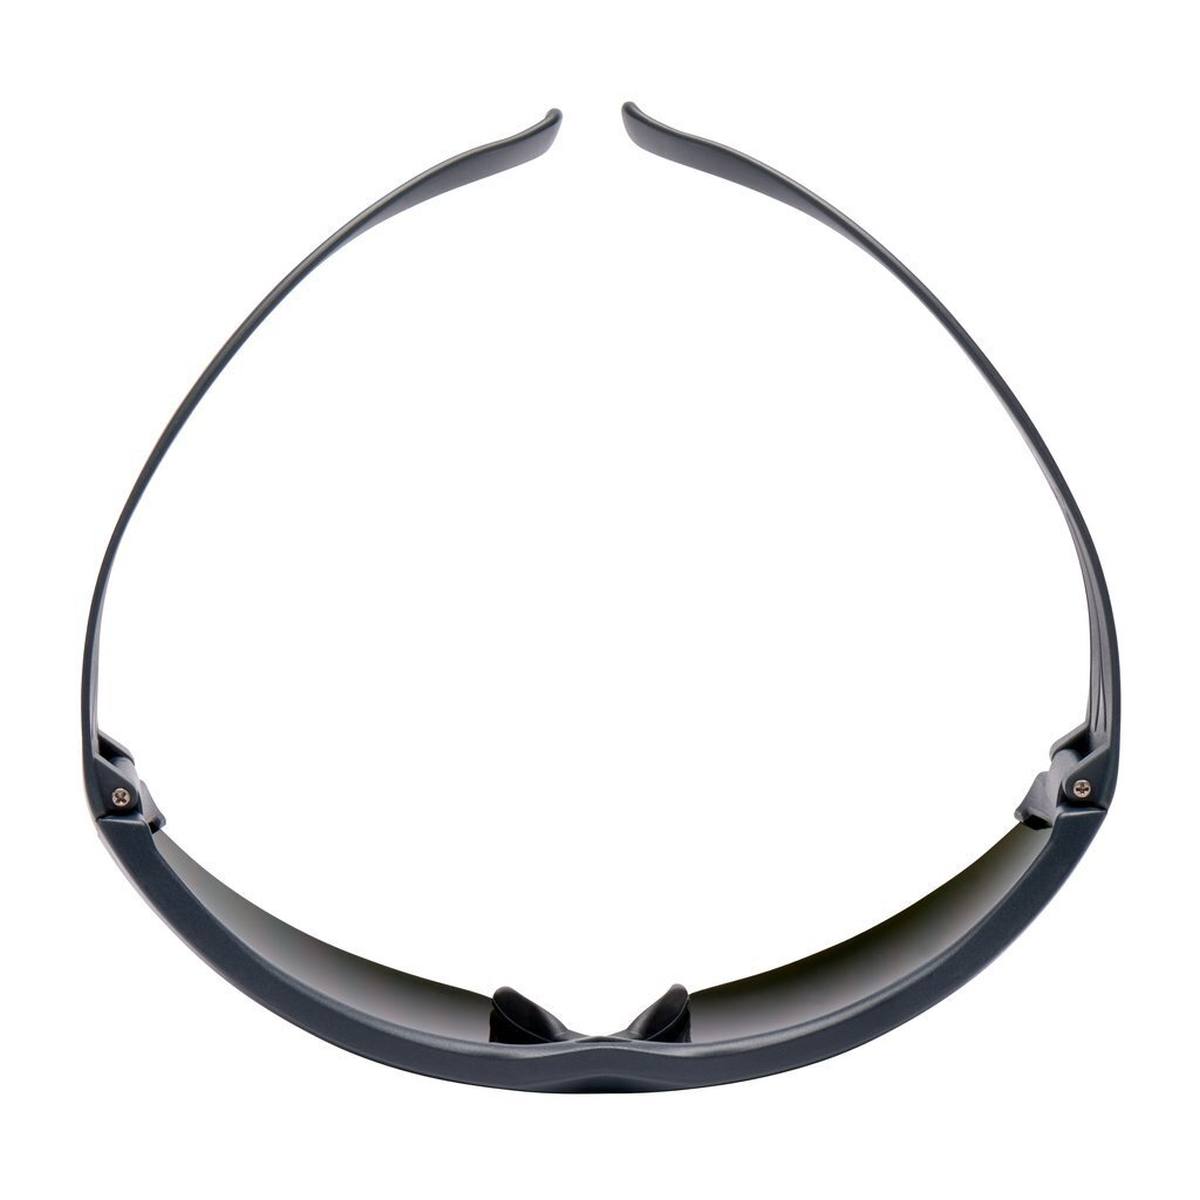 3M SecureFit 600 Schutzbrille, graue Bügel, Antikratz-Beschichtung, Schweißglas Schutzstufe 5.0, SF650AS-EU